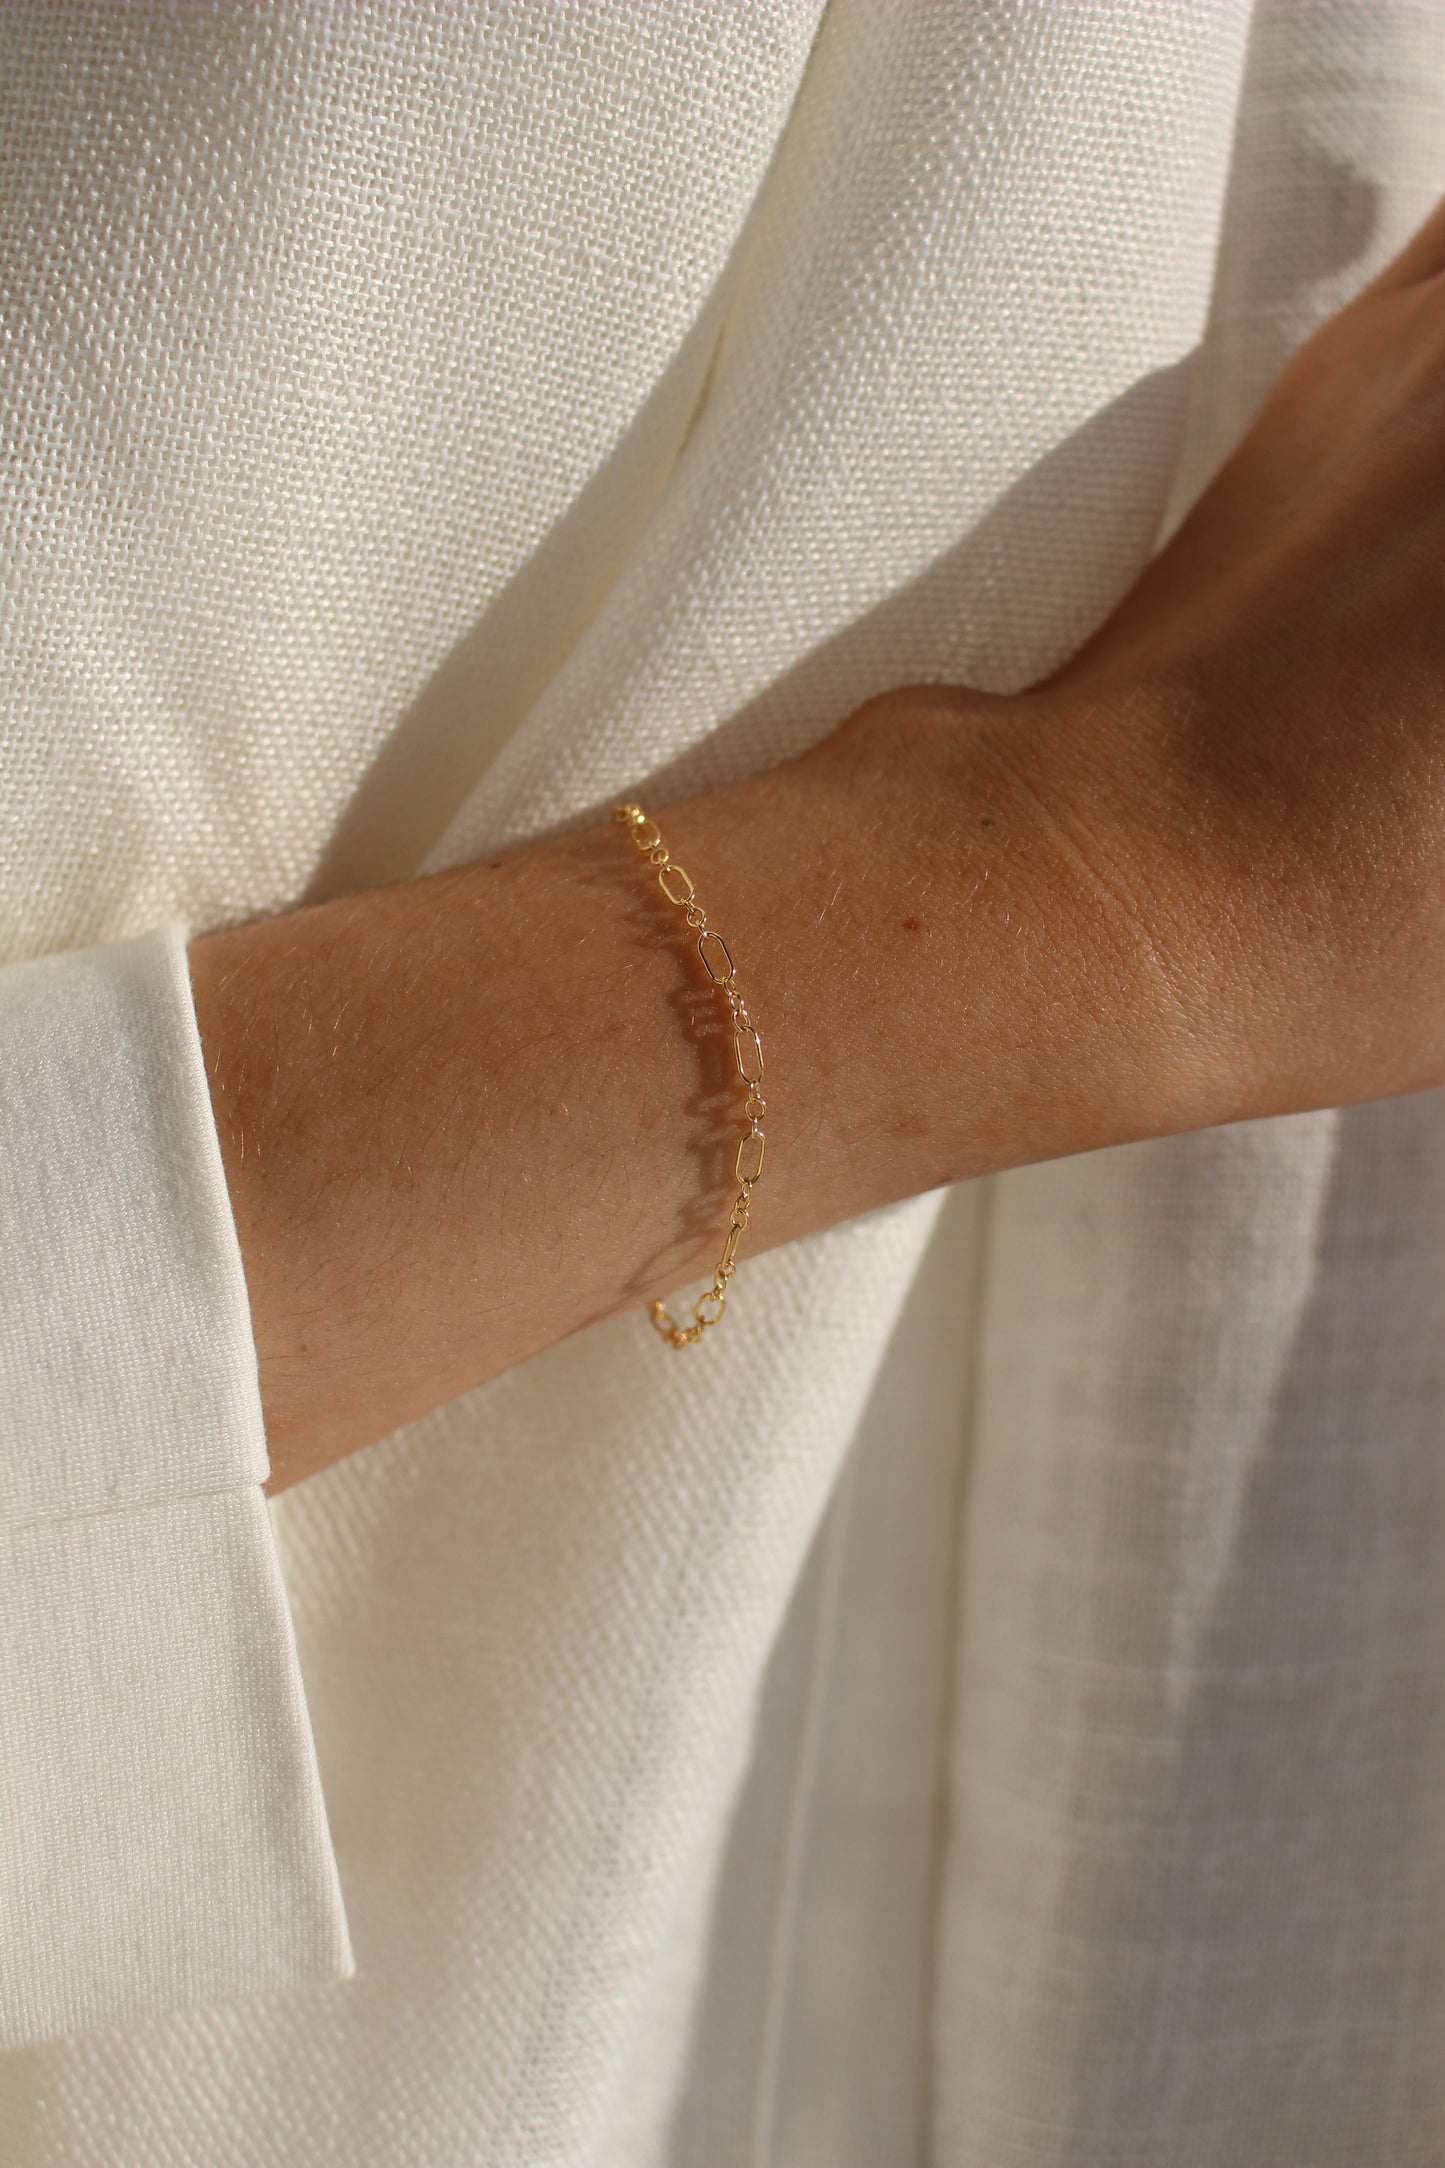 14k Gold Filled Oval Cable Chain Bracelet ∙ Handmade Bracelet ∙ Adjustable Bracelet ∙ Allergy Free Jewelry ∙ Friendship Bracelet